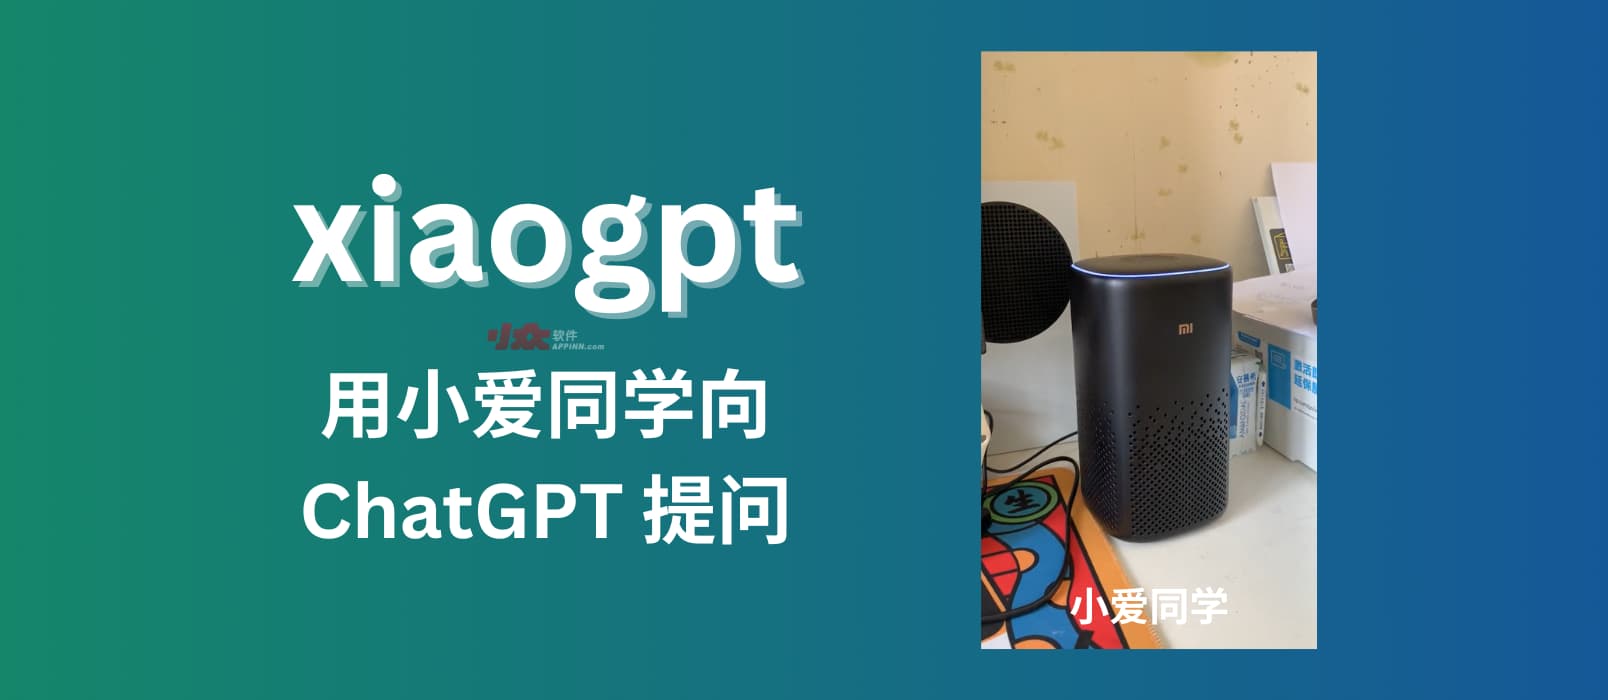 xiaogpt - 用小爱同学向 ChatGPT 提问